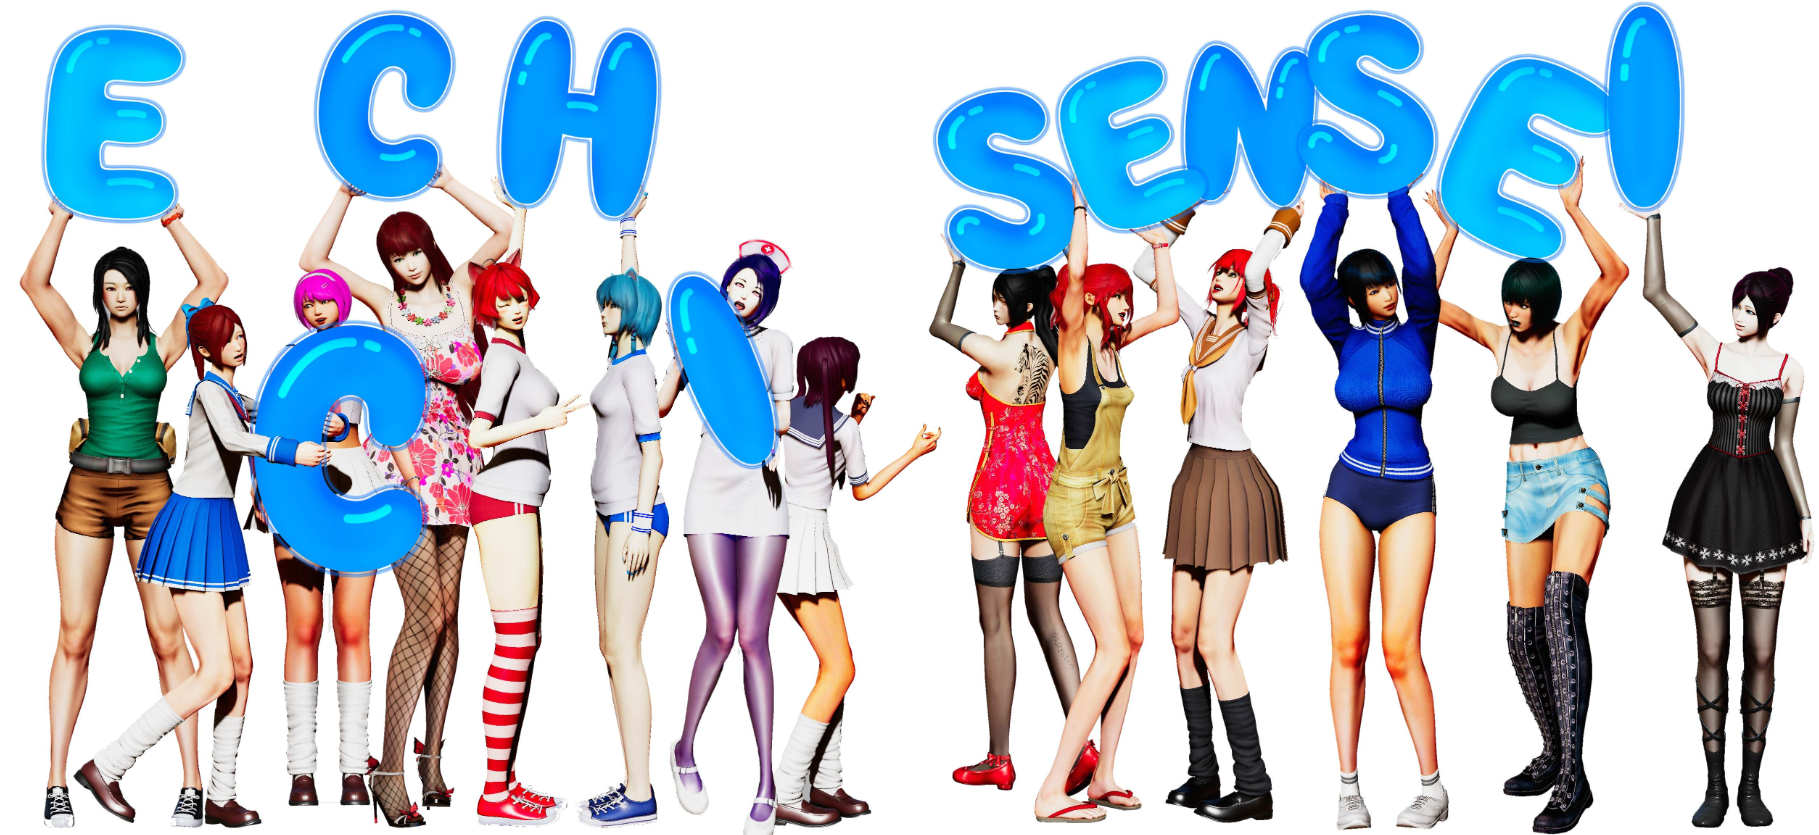 Ecchi Sensei – Walkthrough and Endings Guide 1 - steamlists.com